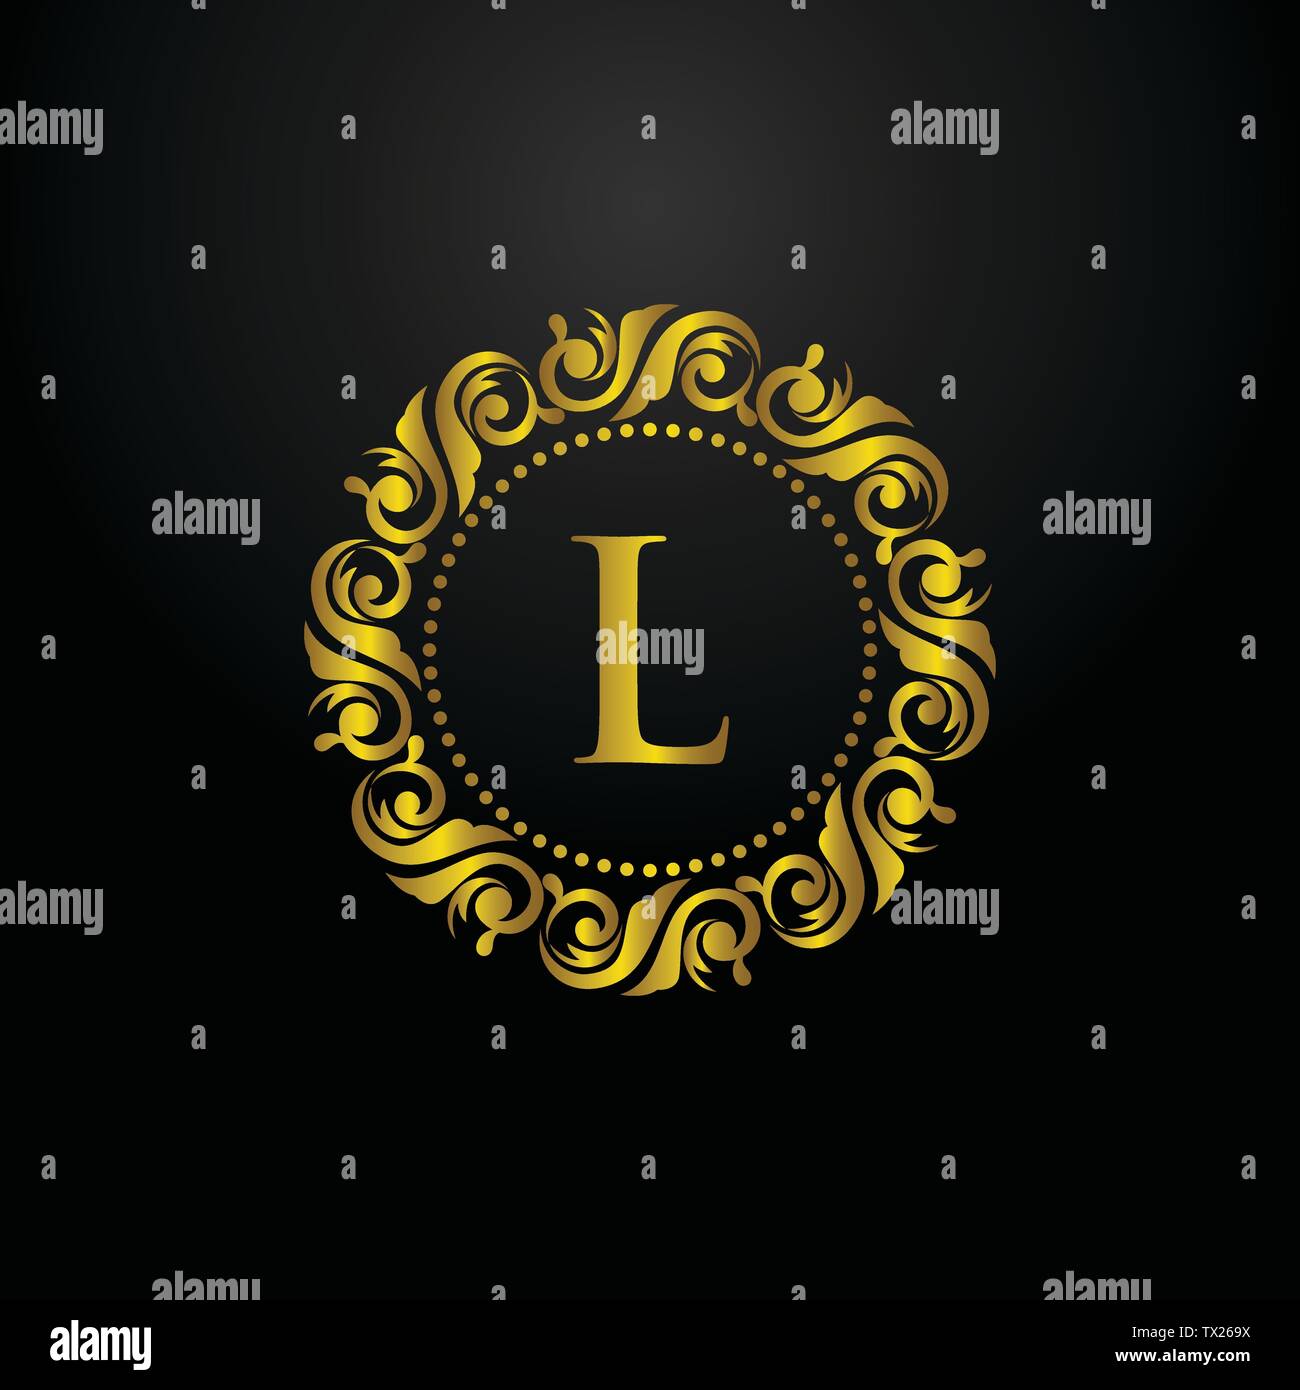 luxury company logos